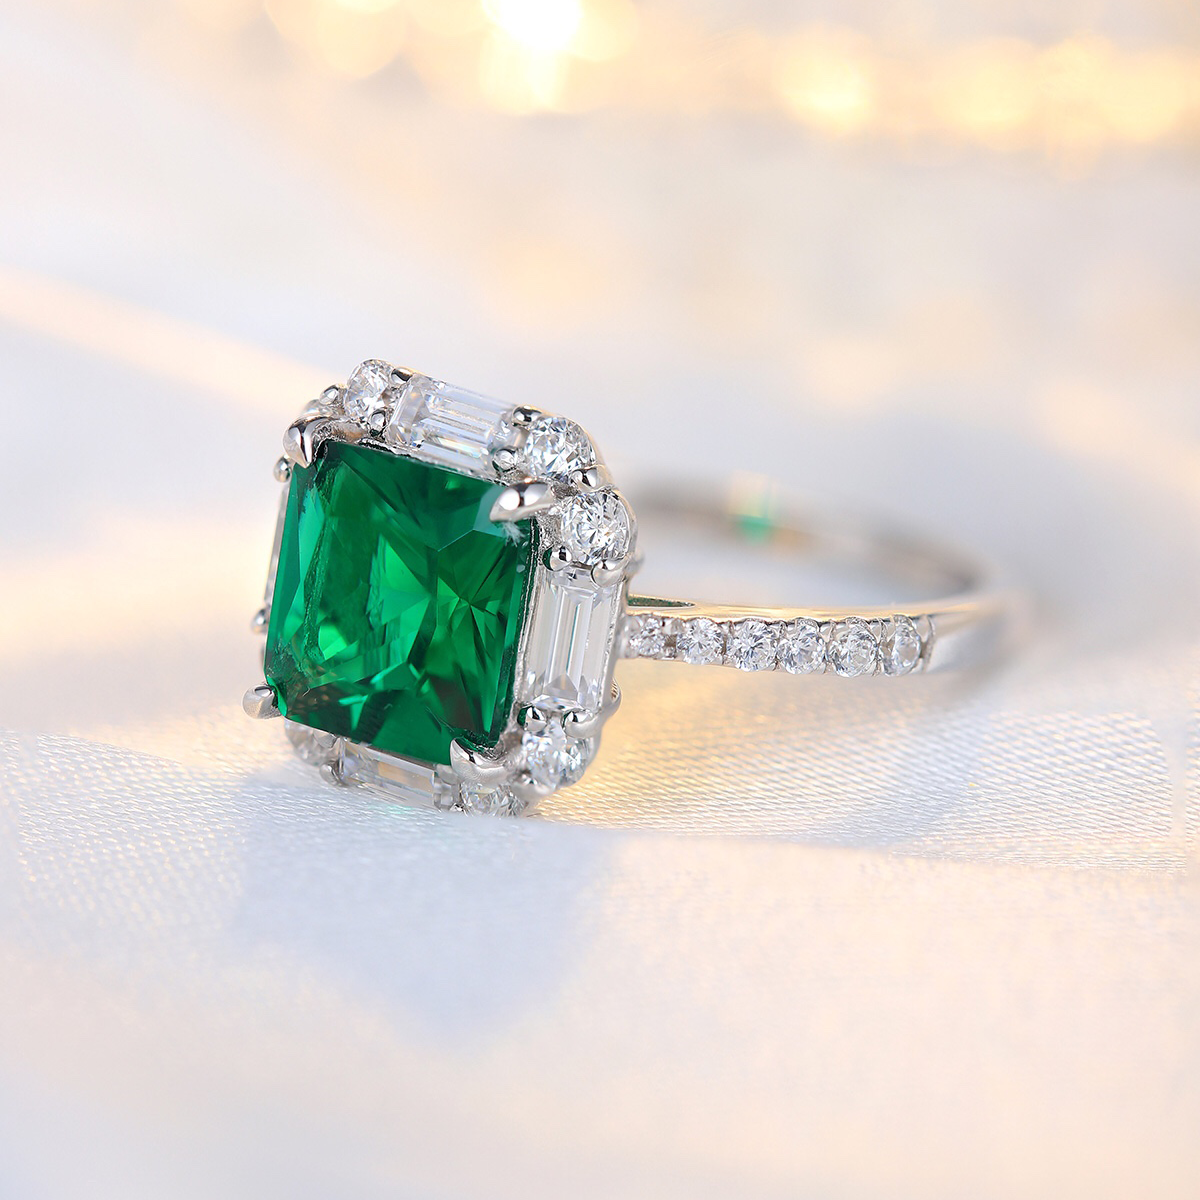 2.0ct asscher cut green simulated emerald 14k white gold anniversary  engagement ring size 10.25 - Walmart.com